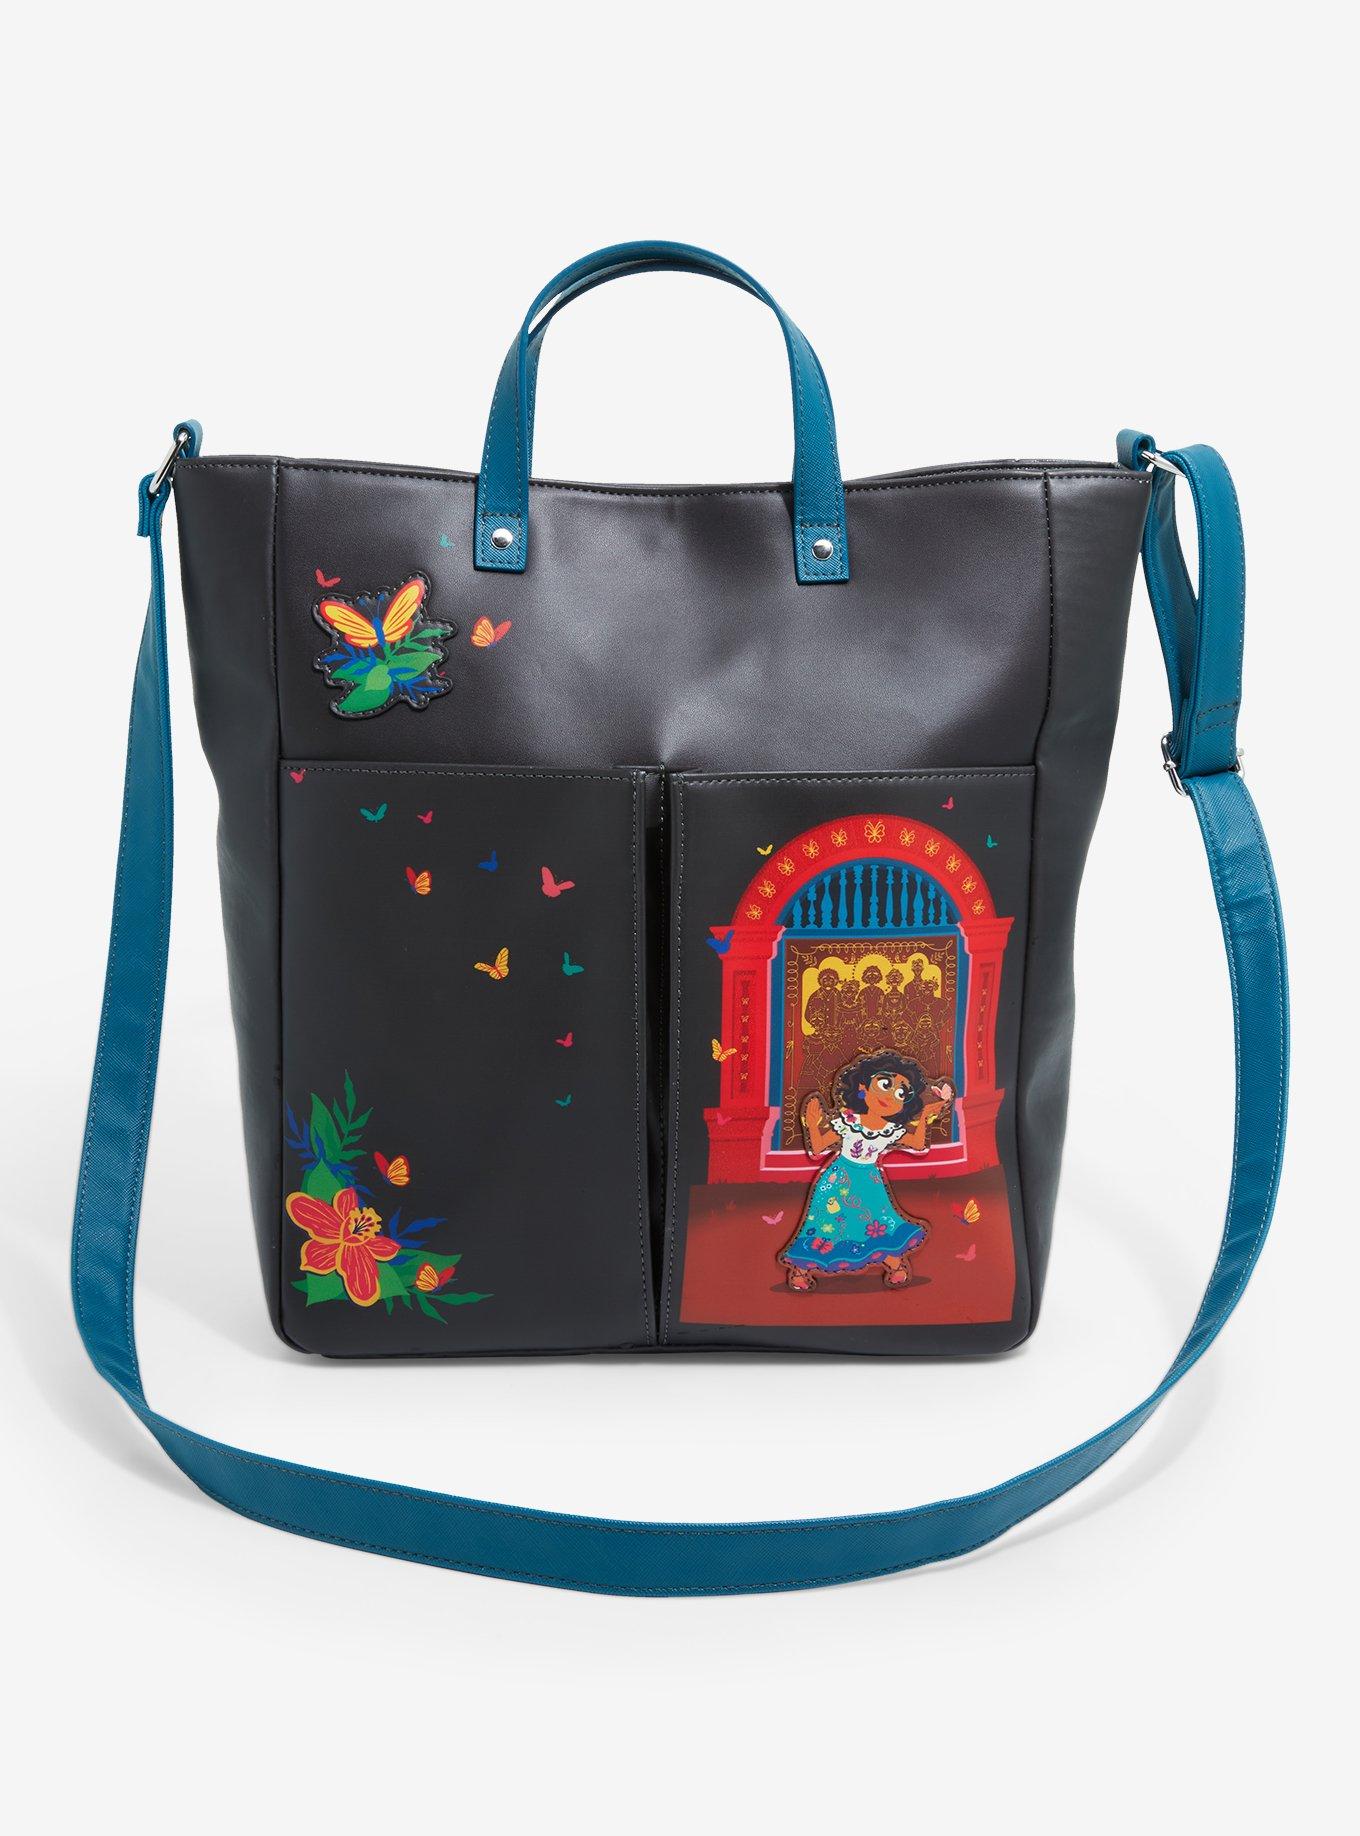 Kawaii Kirby Anime Cartoon Plush Doll Lunch Bag Picnic Travel Pouch  Handbags Lunch Box Tote Bags mummy bag Girls Gift